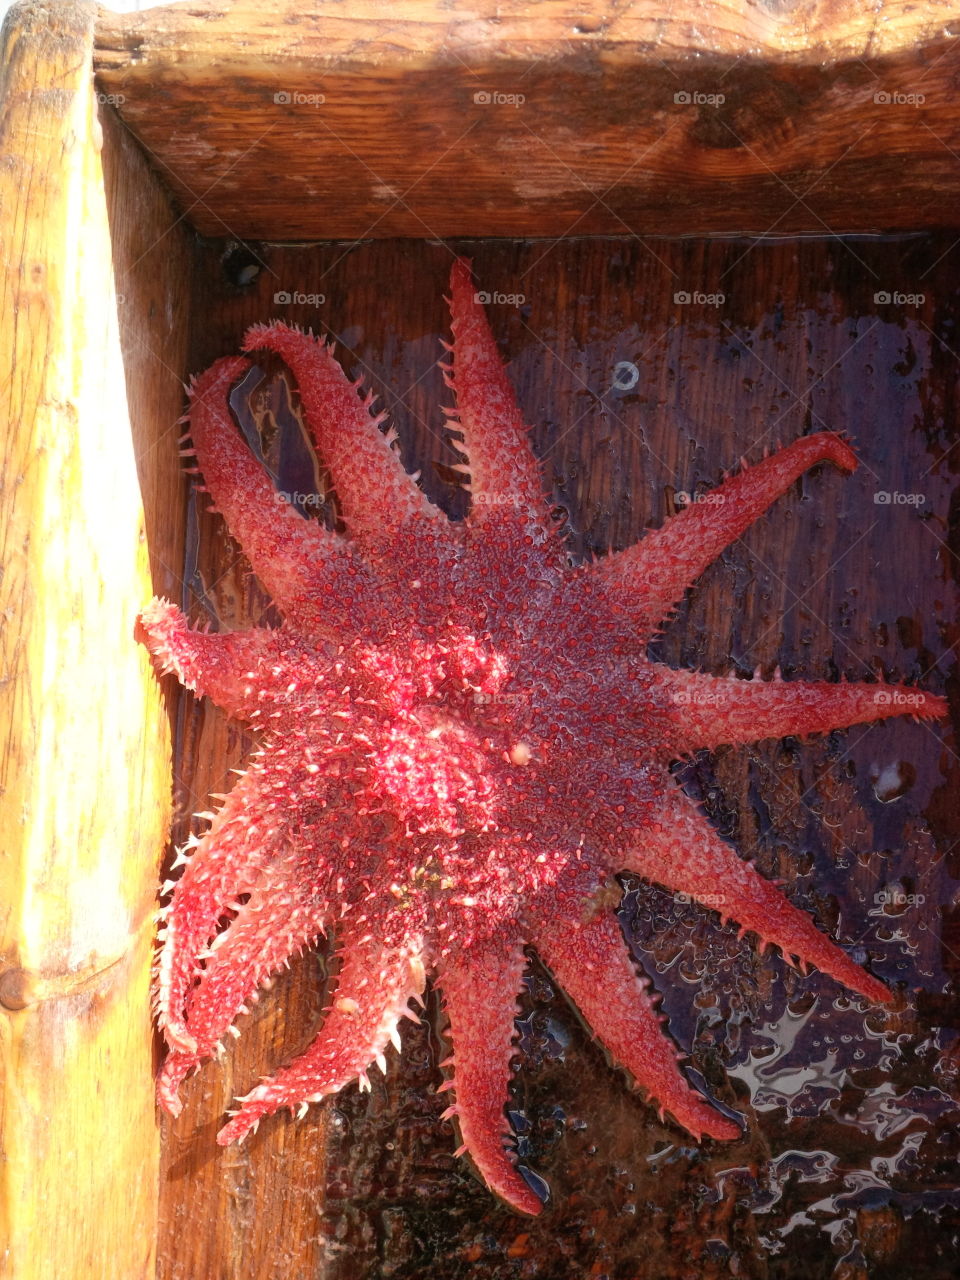 An interesting starfish